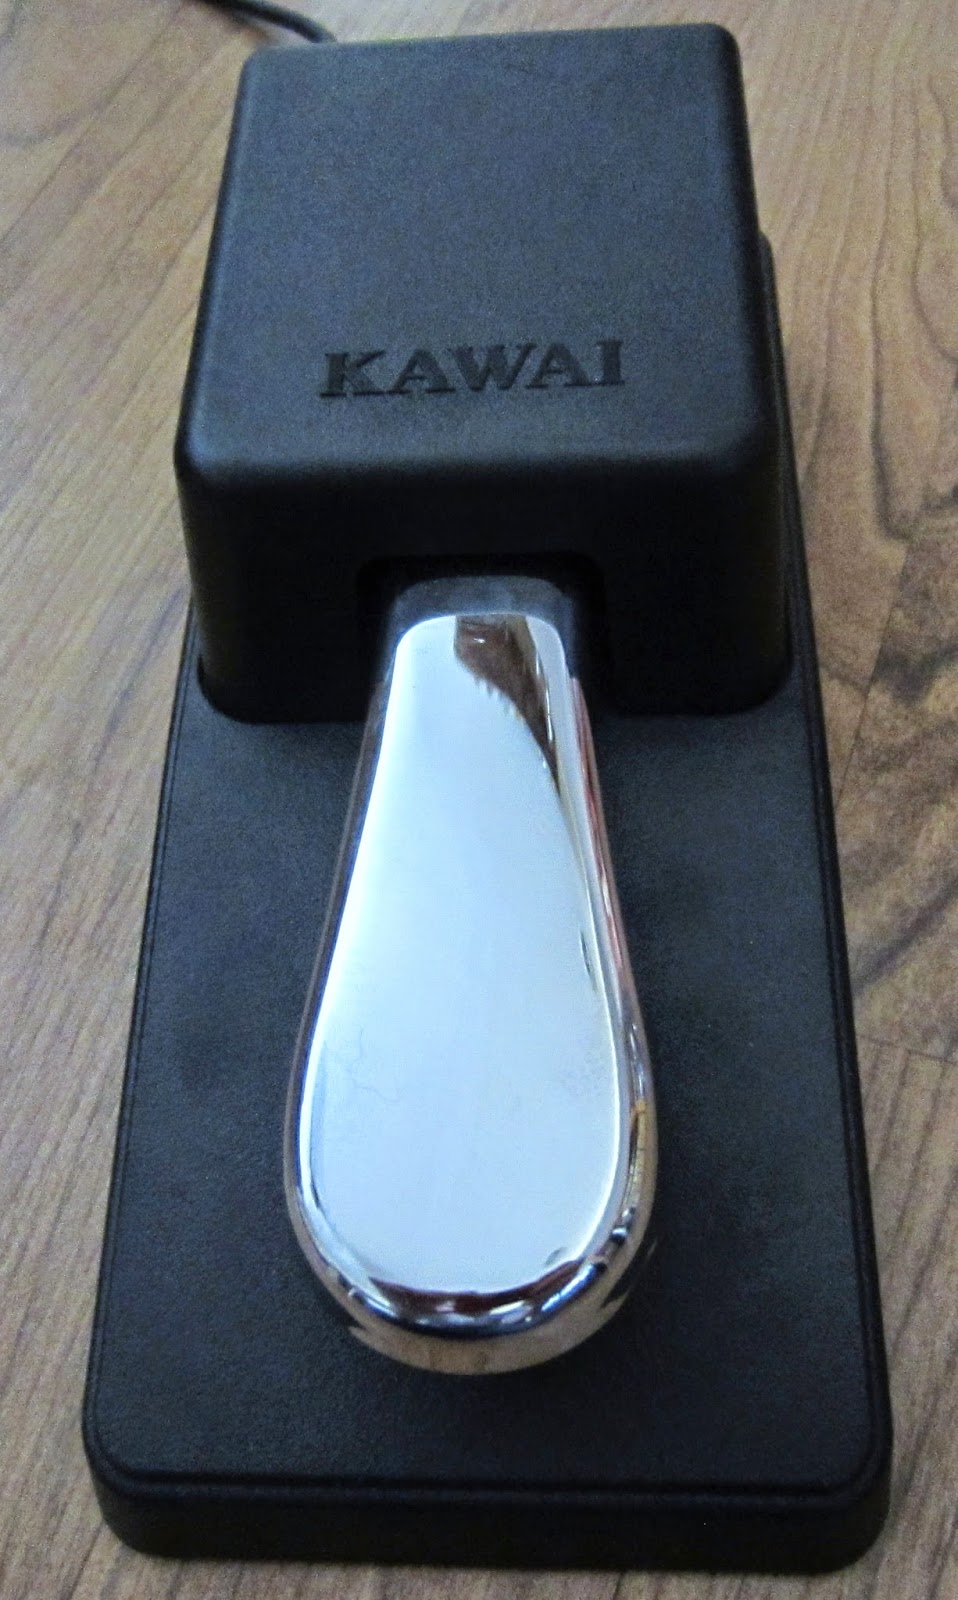 Kawai MP7 digital piano portable under $2000 - damper pedal